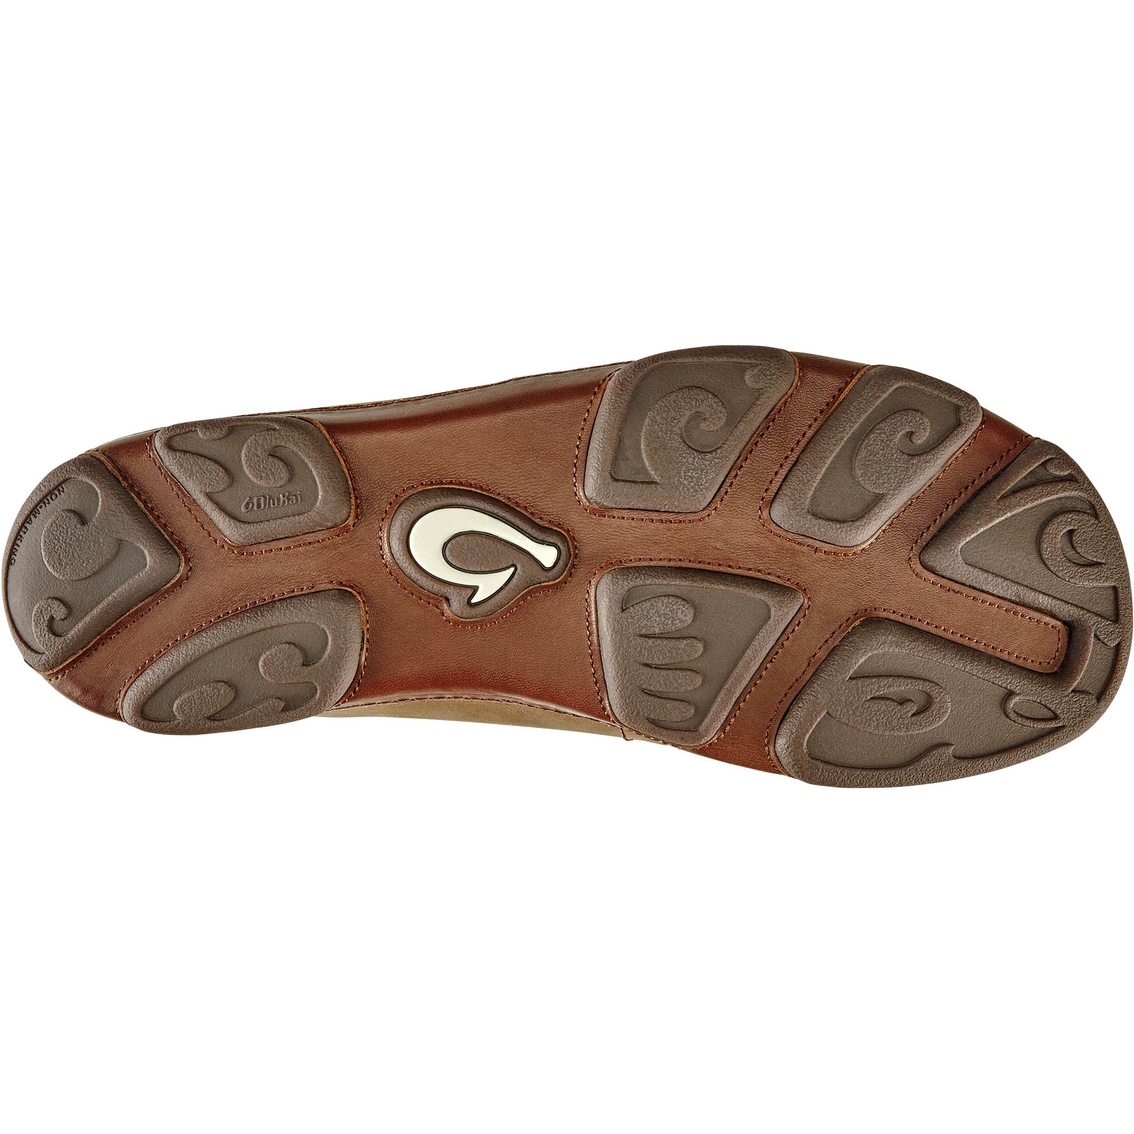 Olukai Men's Moloa Premium Leather Slip On Shoes - Image 4 of 4